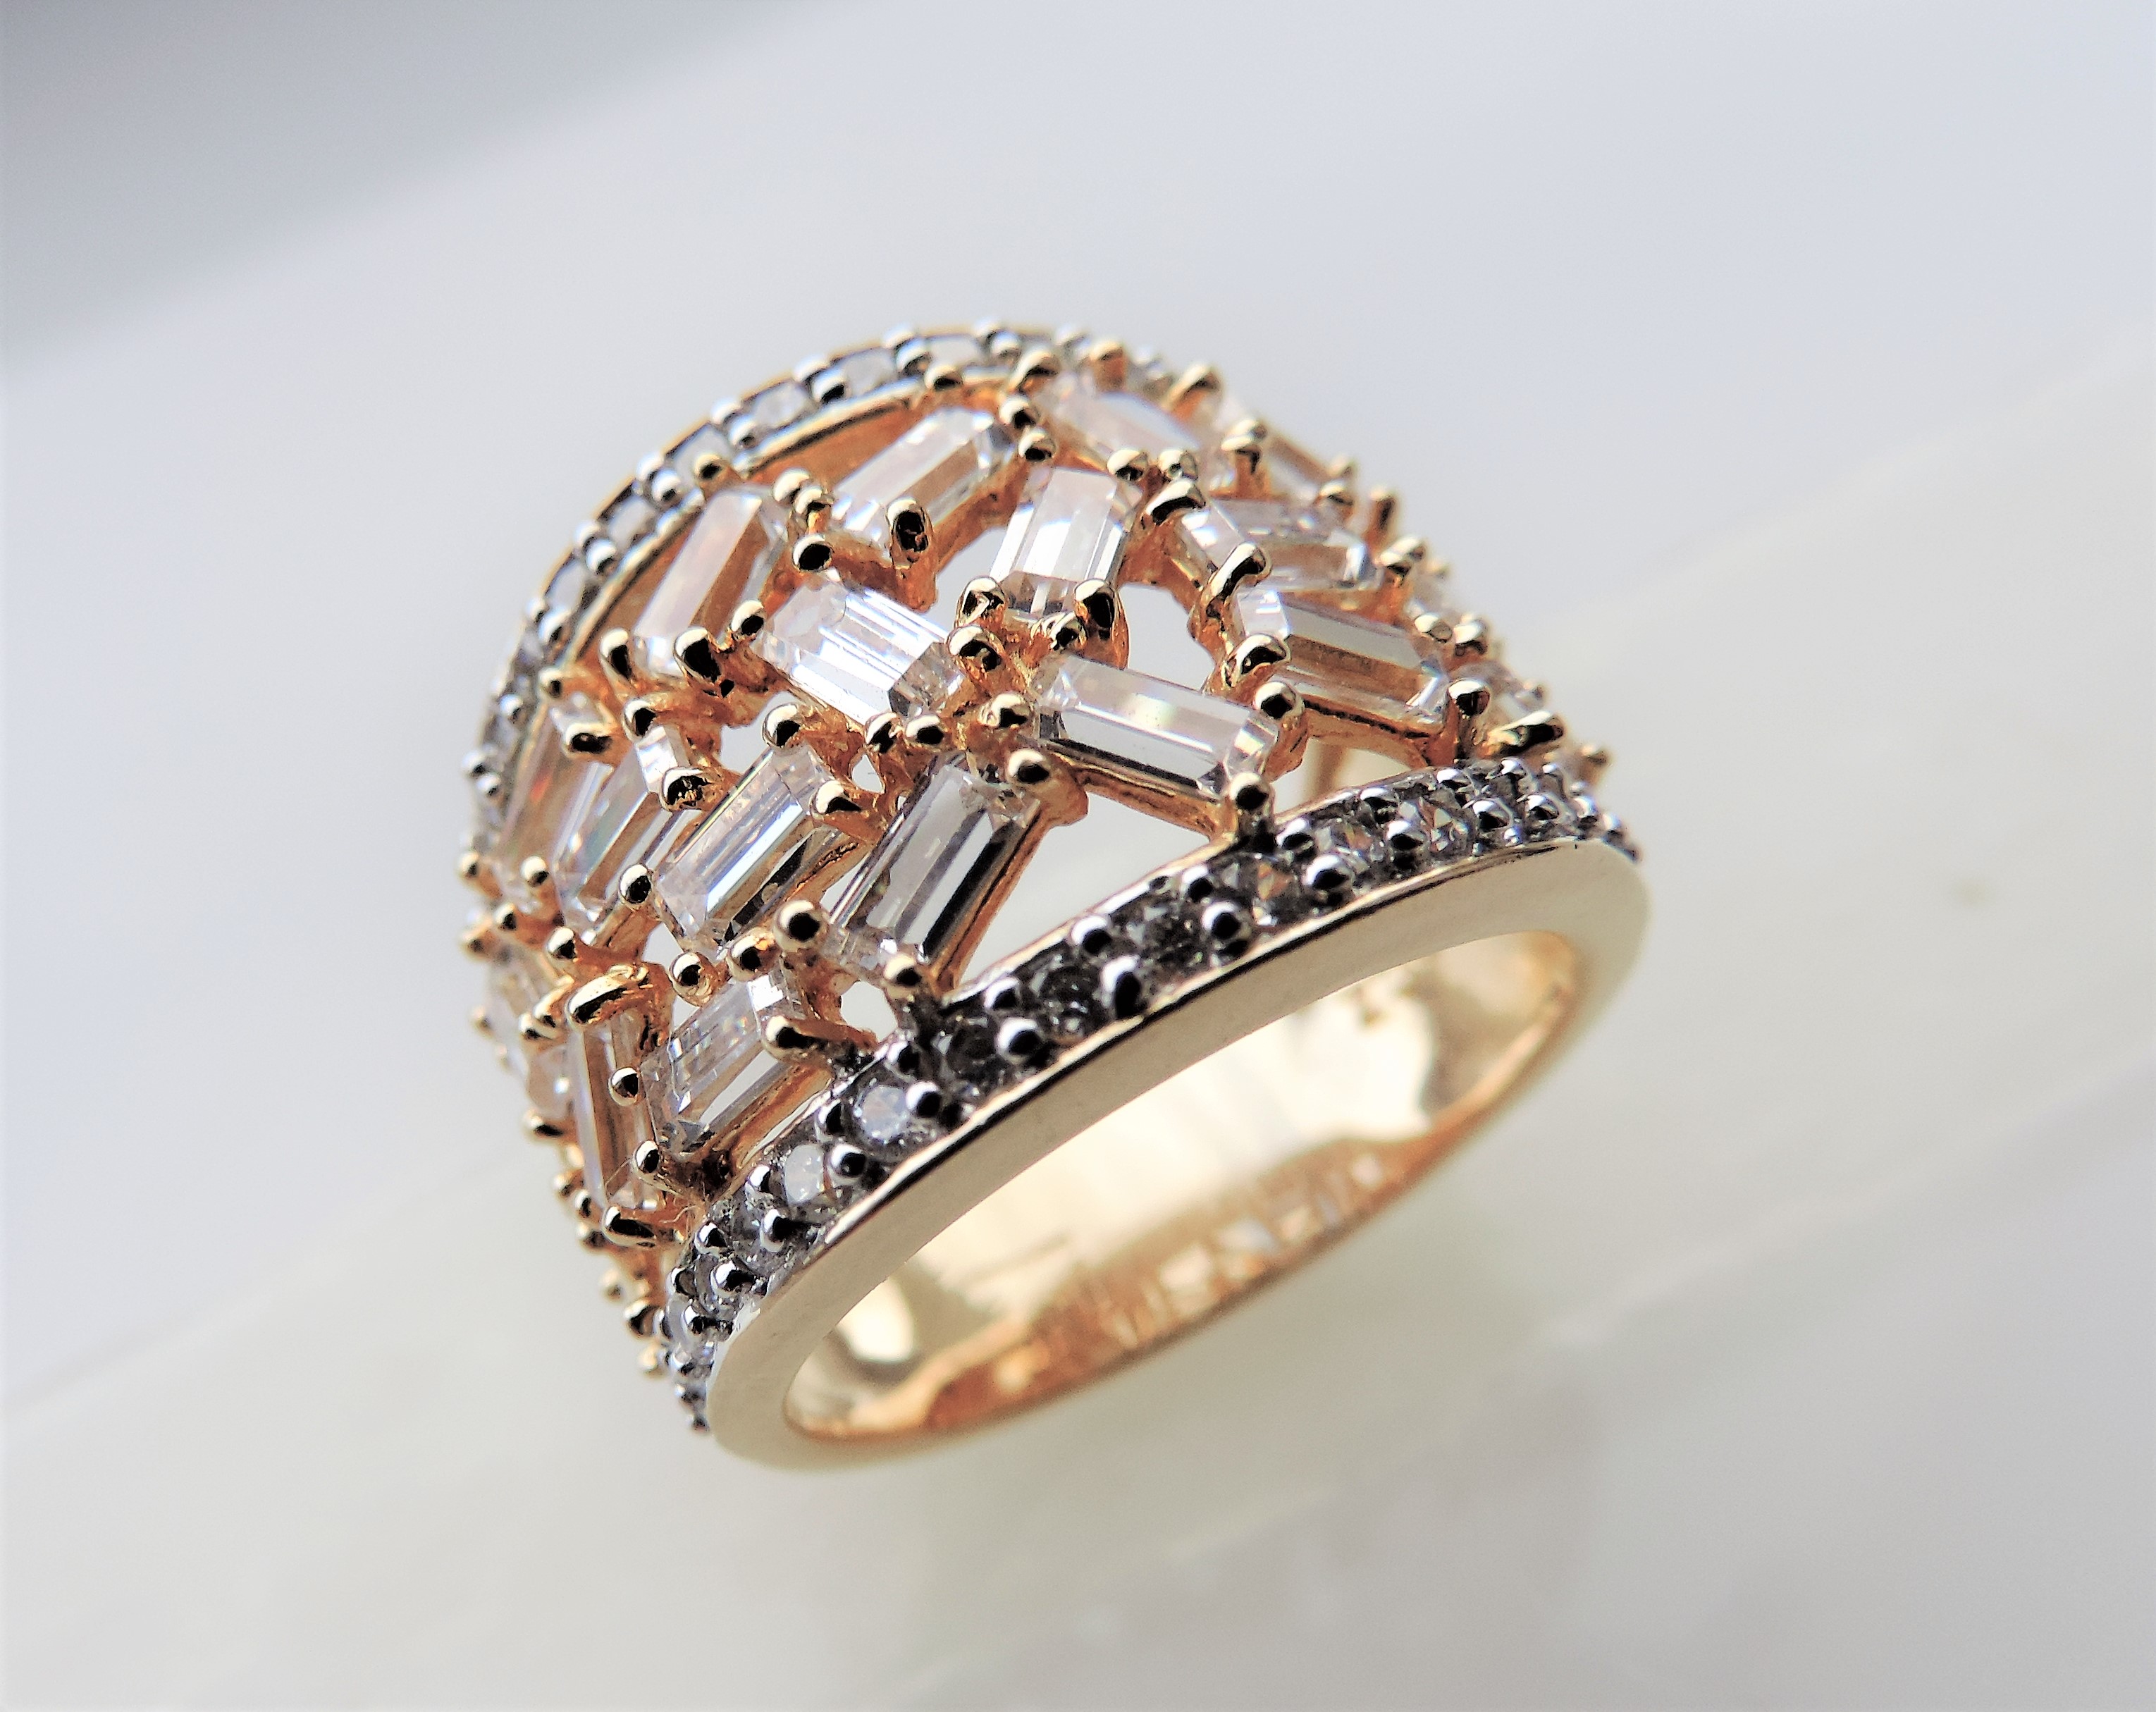 Gold on Sterling Silver Baguette Gemstone Ring